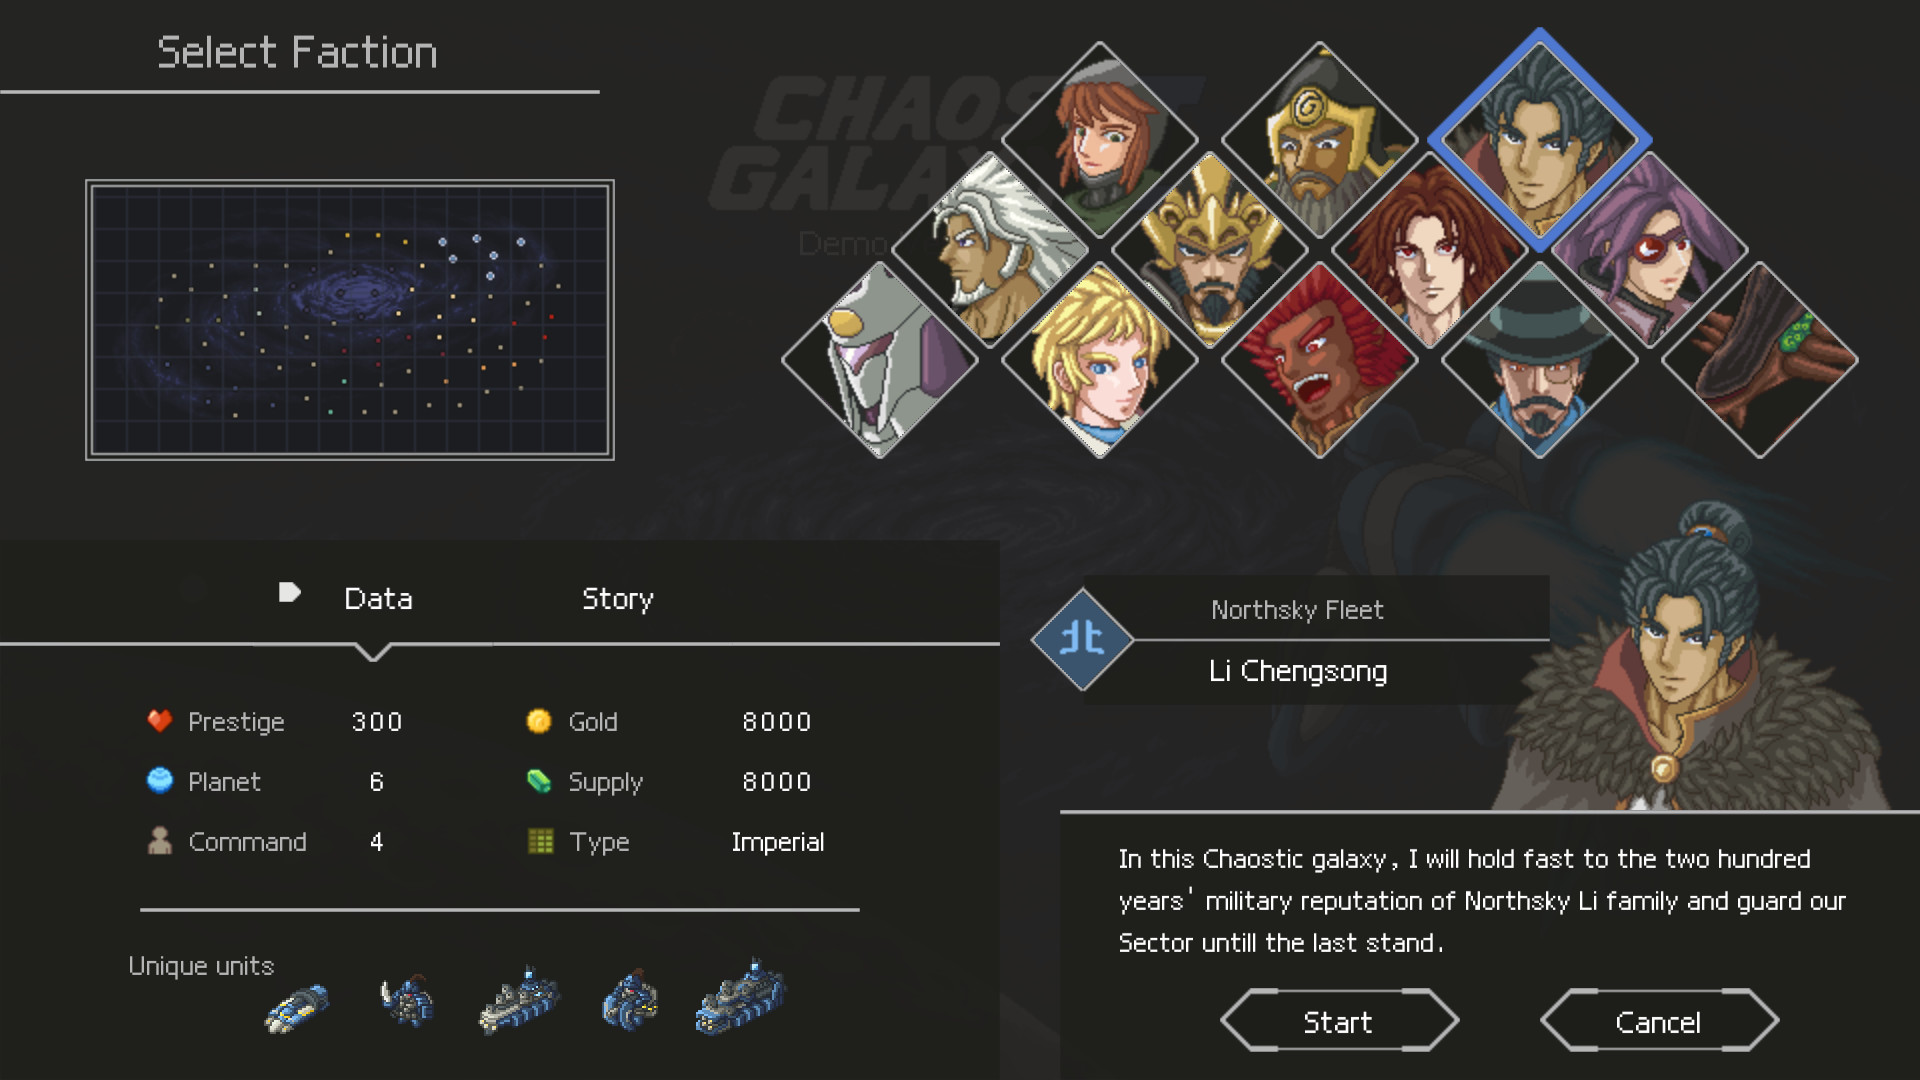 [$ 15.81] Chaos Galaxy 2 Steam CD Key